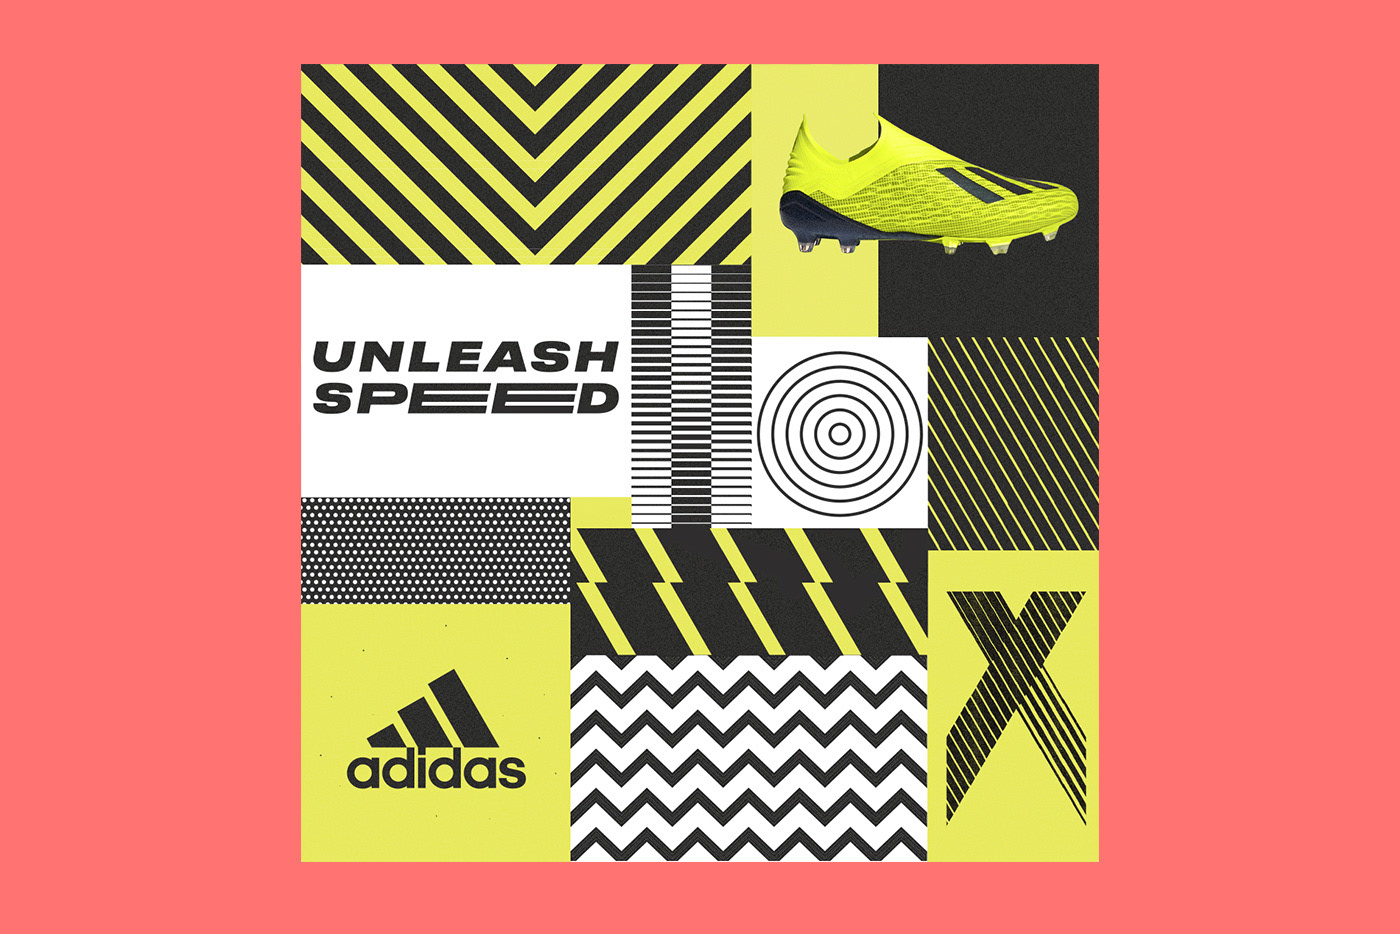 Graphic Design for Adidas Predator by Gordon Reid